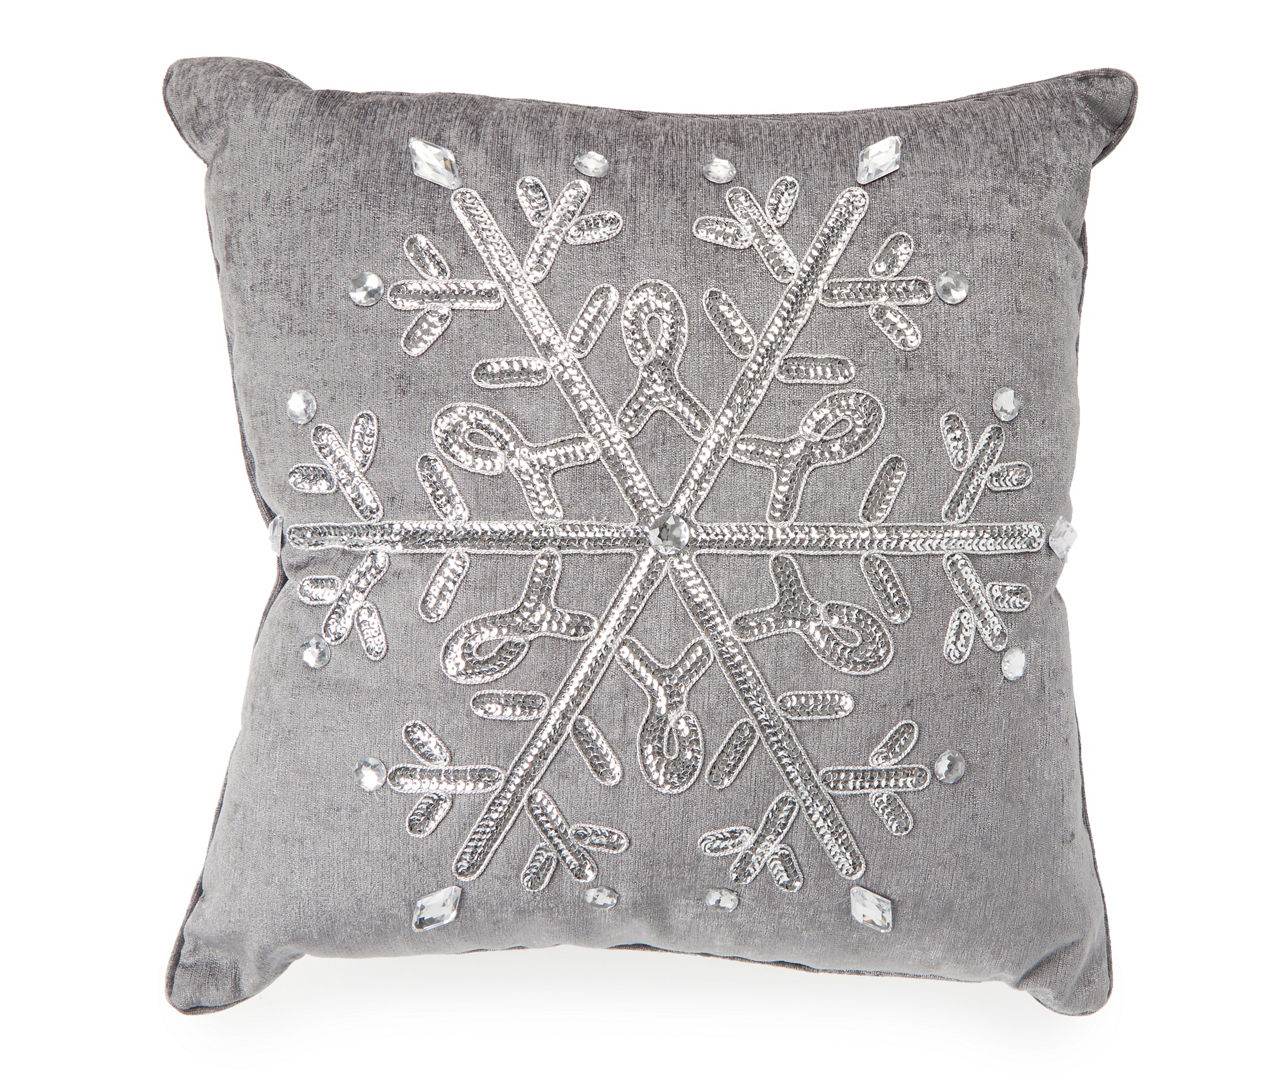 Winter Wonder Lane Red & White Embroidered Snowflake Throw Pillow